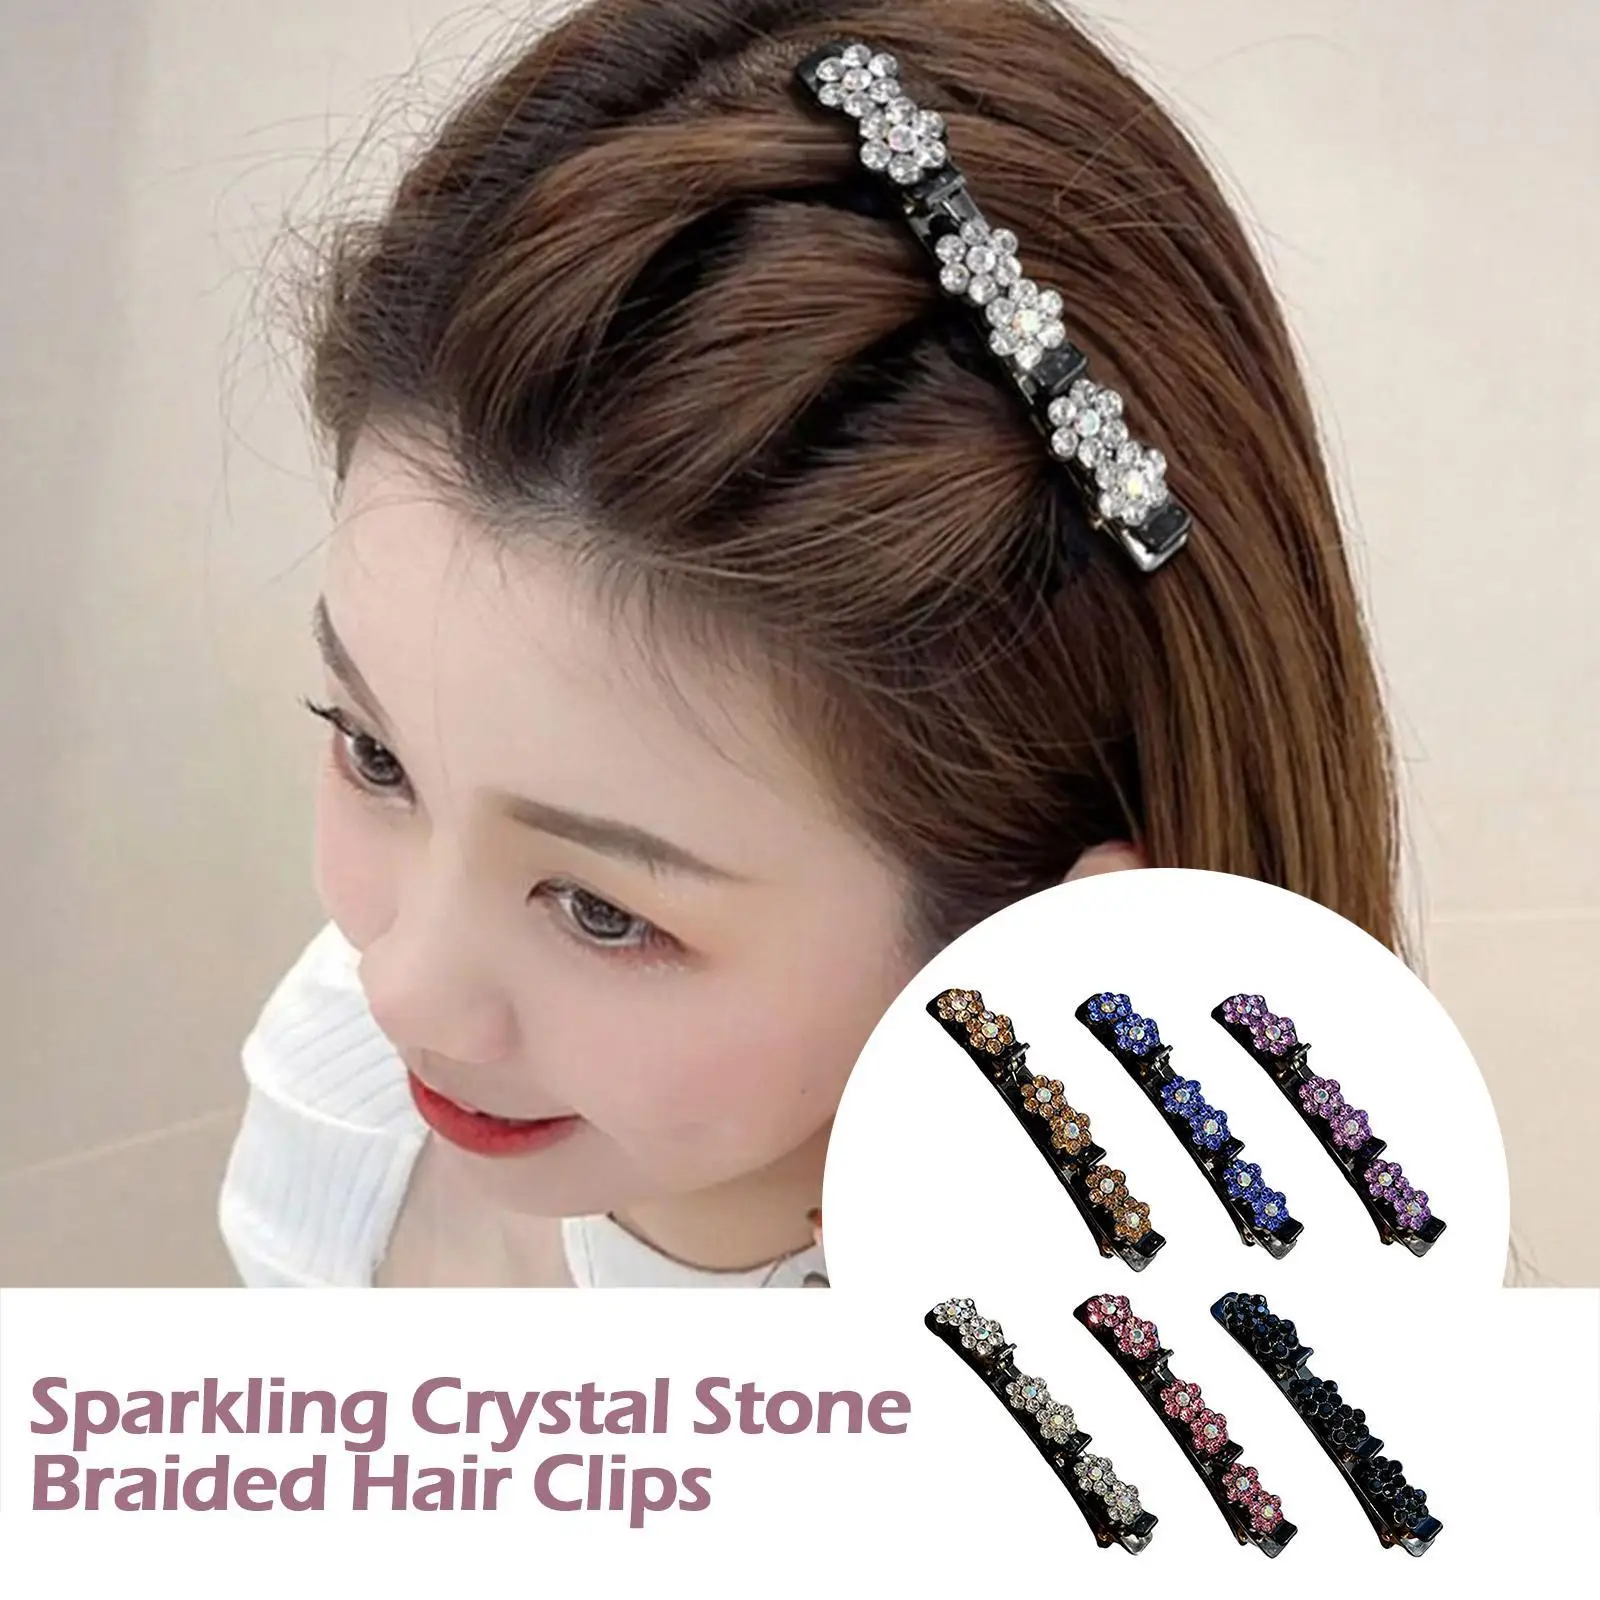 

Sparkling Crystal Stone Braided Hair Clips, Satin Rhinestone Fabric Hair Bands Womens Double Bangs Twist Plait Duckbill Hairpin